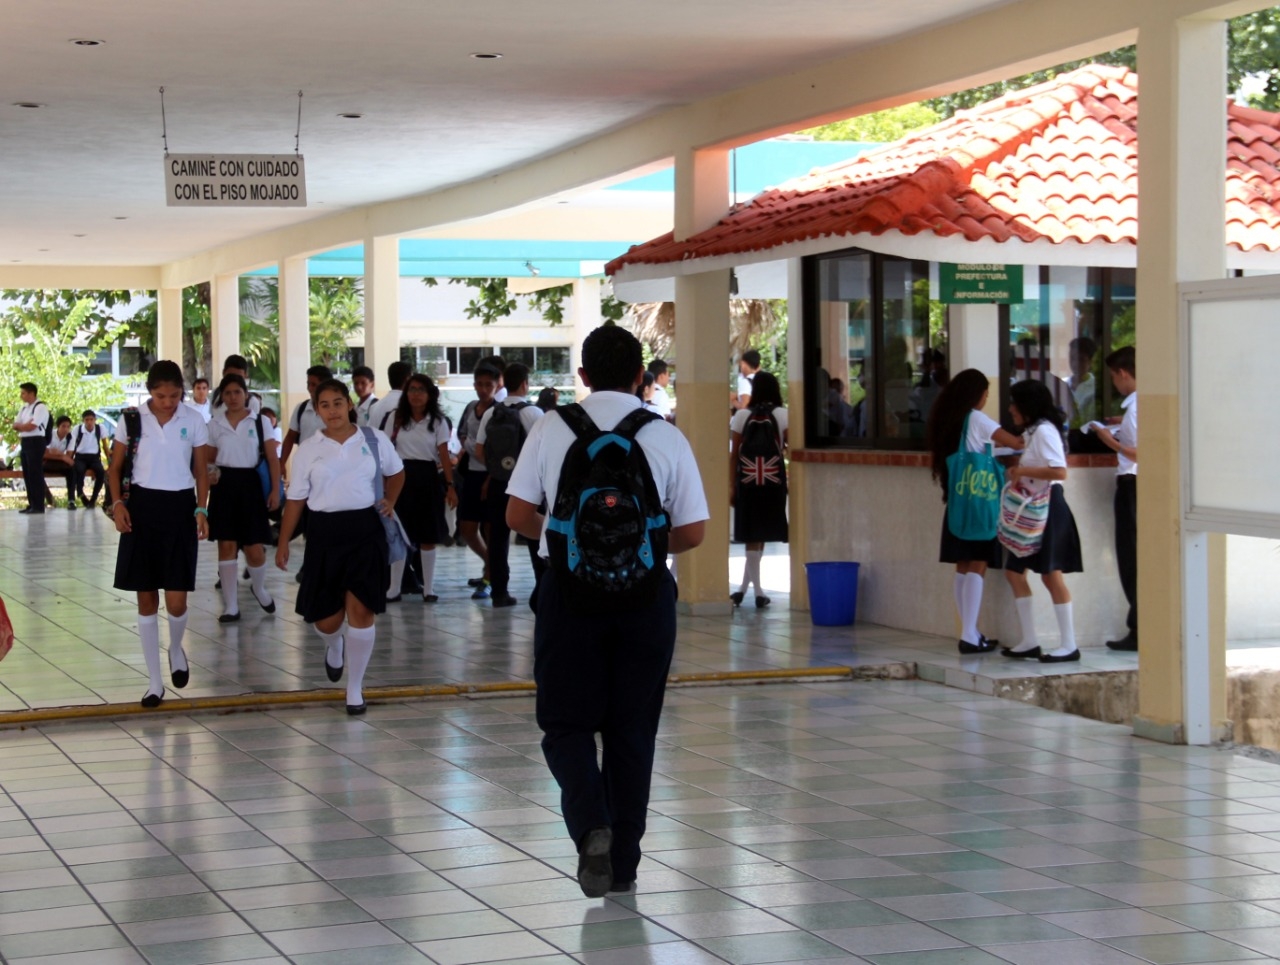 Escuelas de bachillerato en Quintana Roo no cumplen demanda de estudiantes